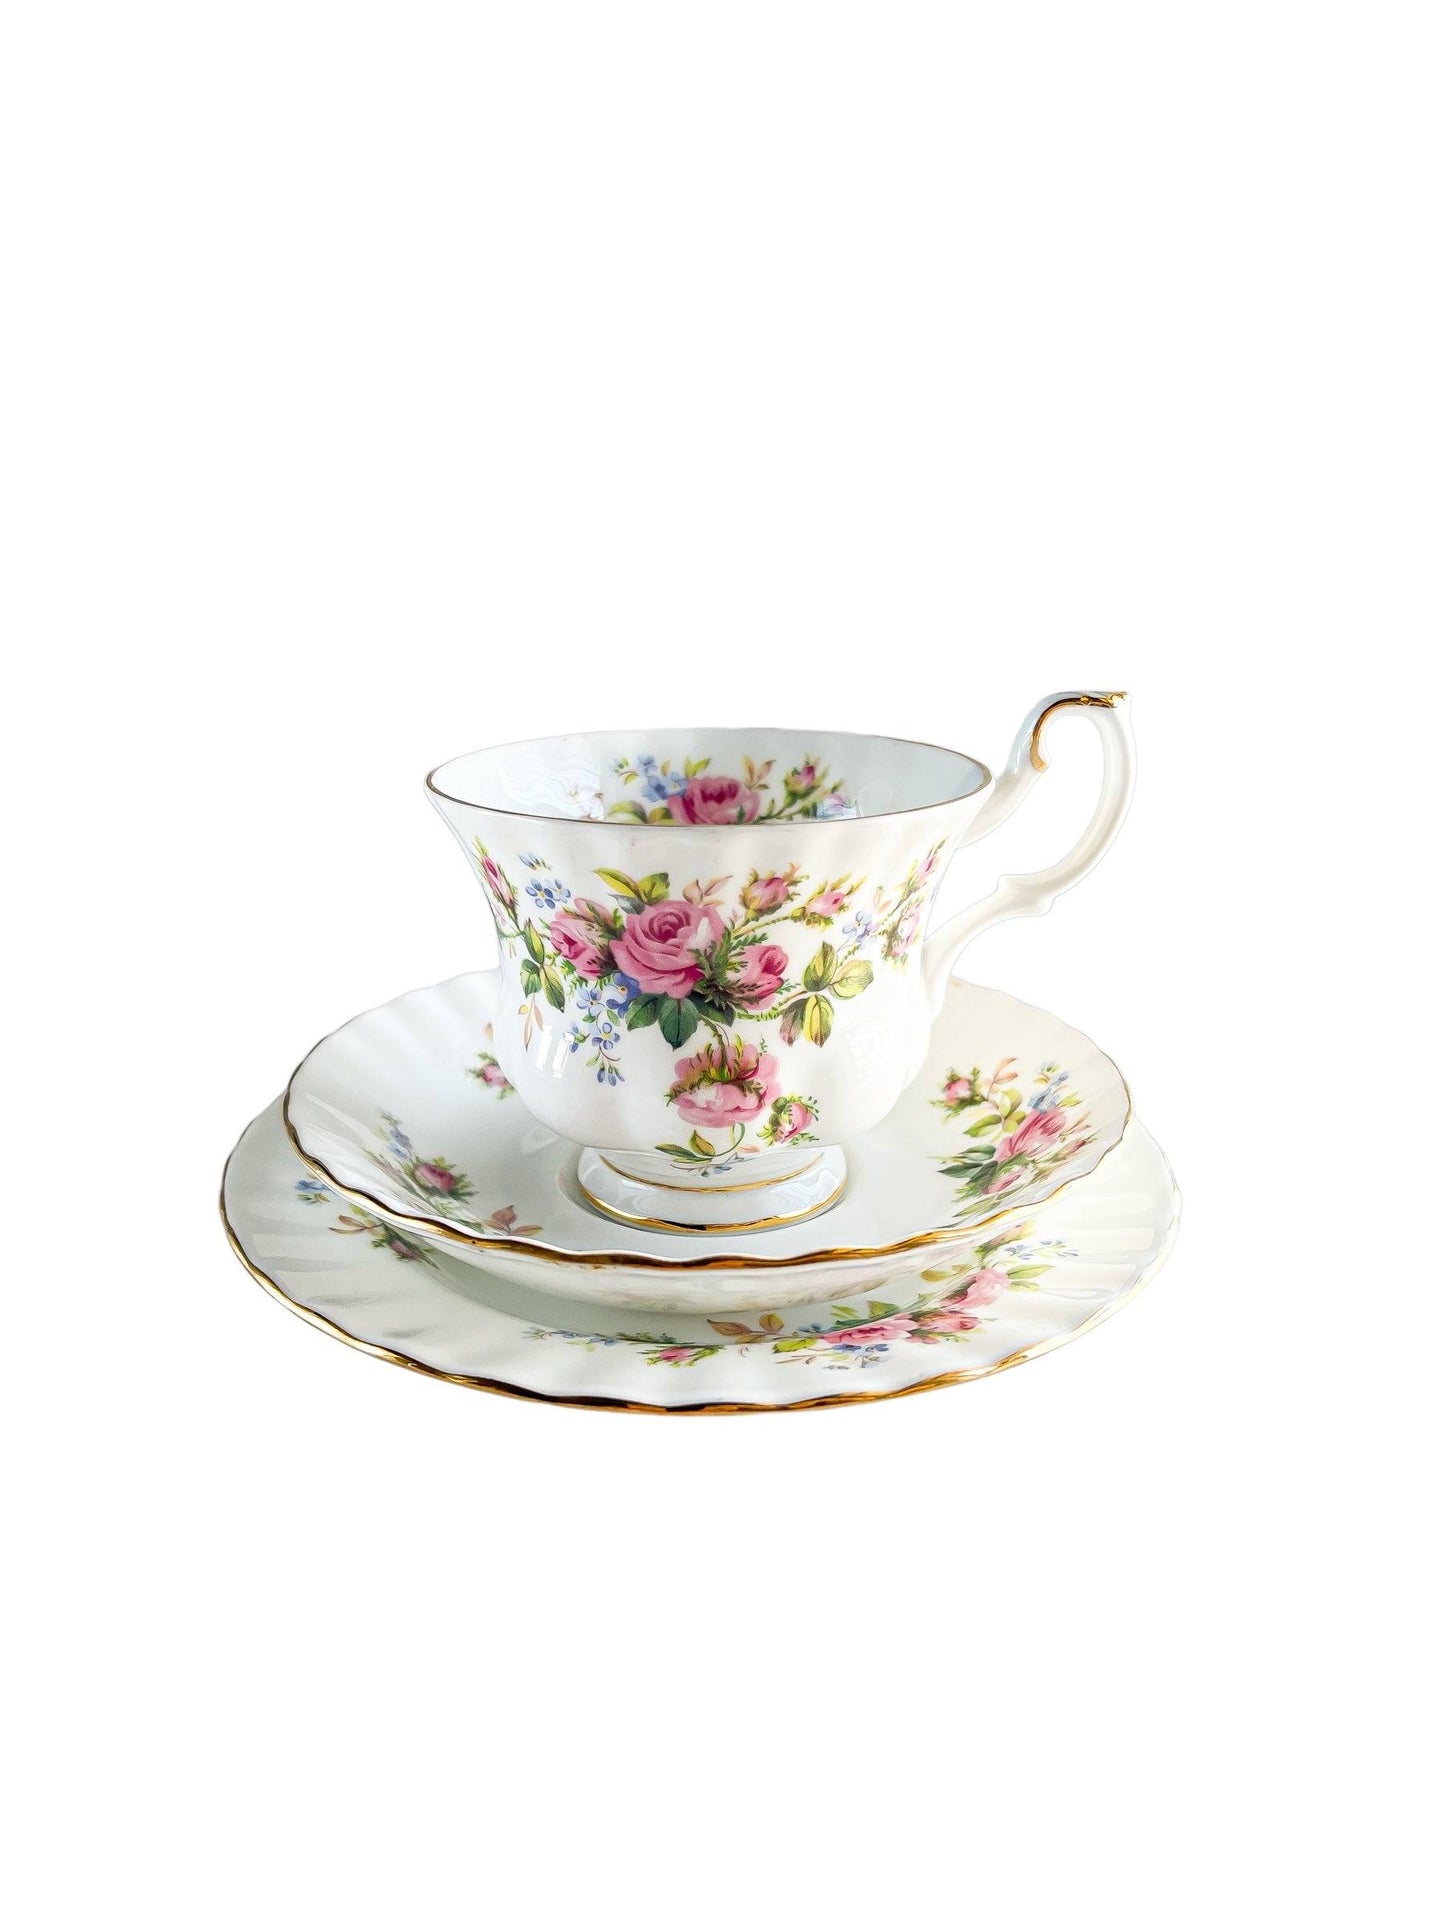 Royal Albert Tea Set - 'Moss Rose' Collection - SOSC Home